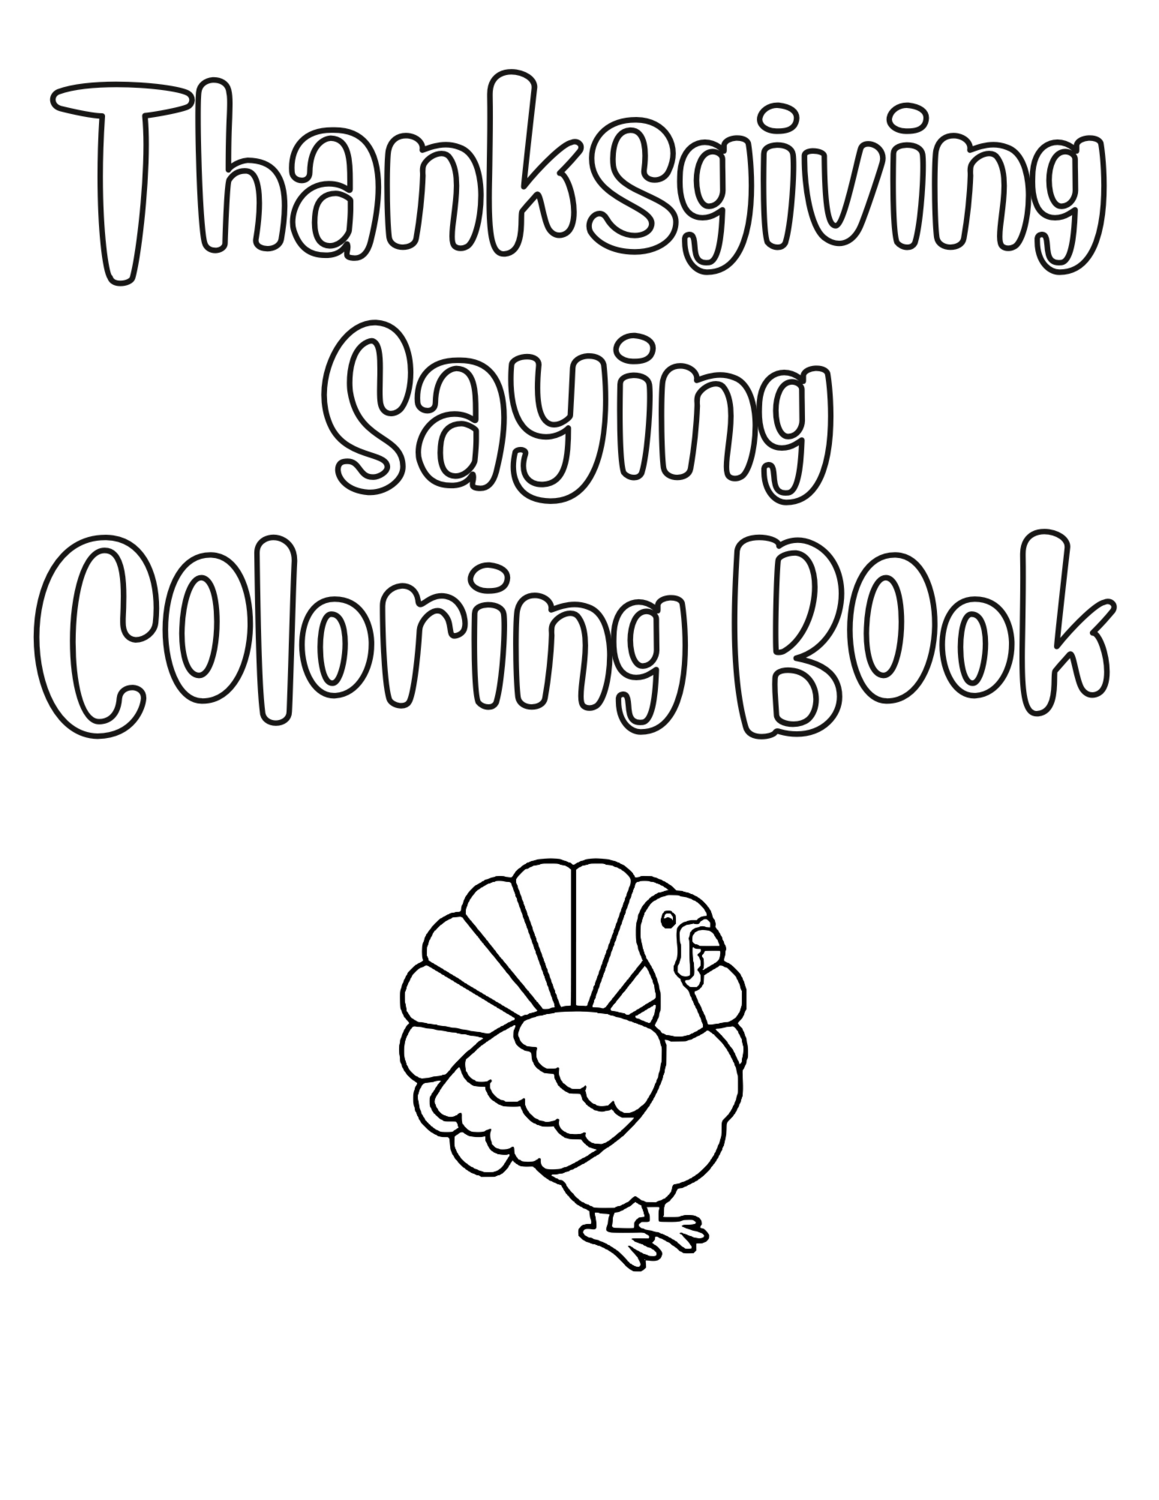 Thanksgiving Saying Coloring Book